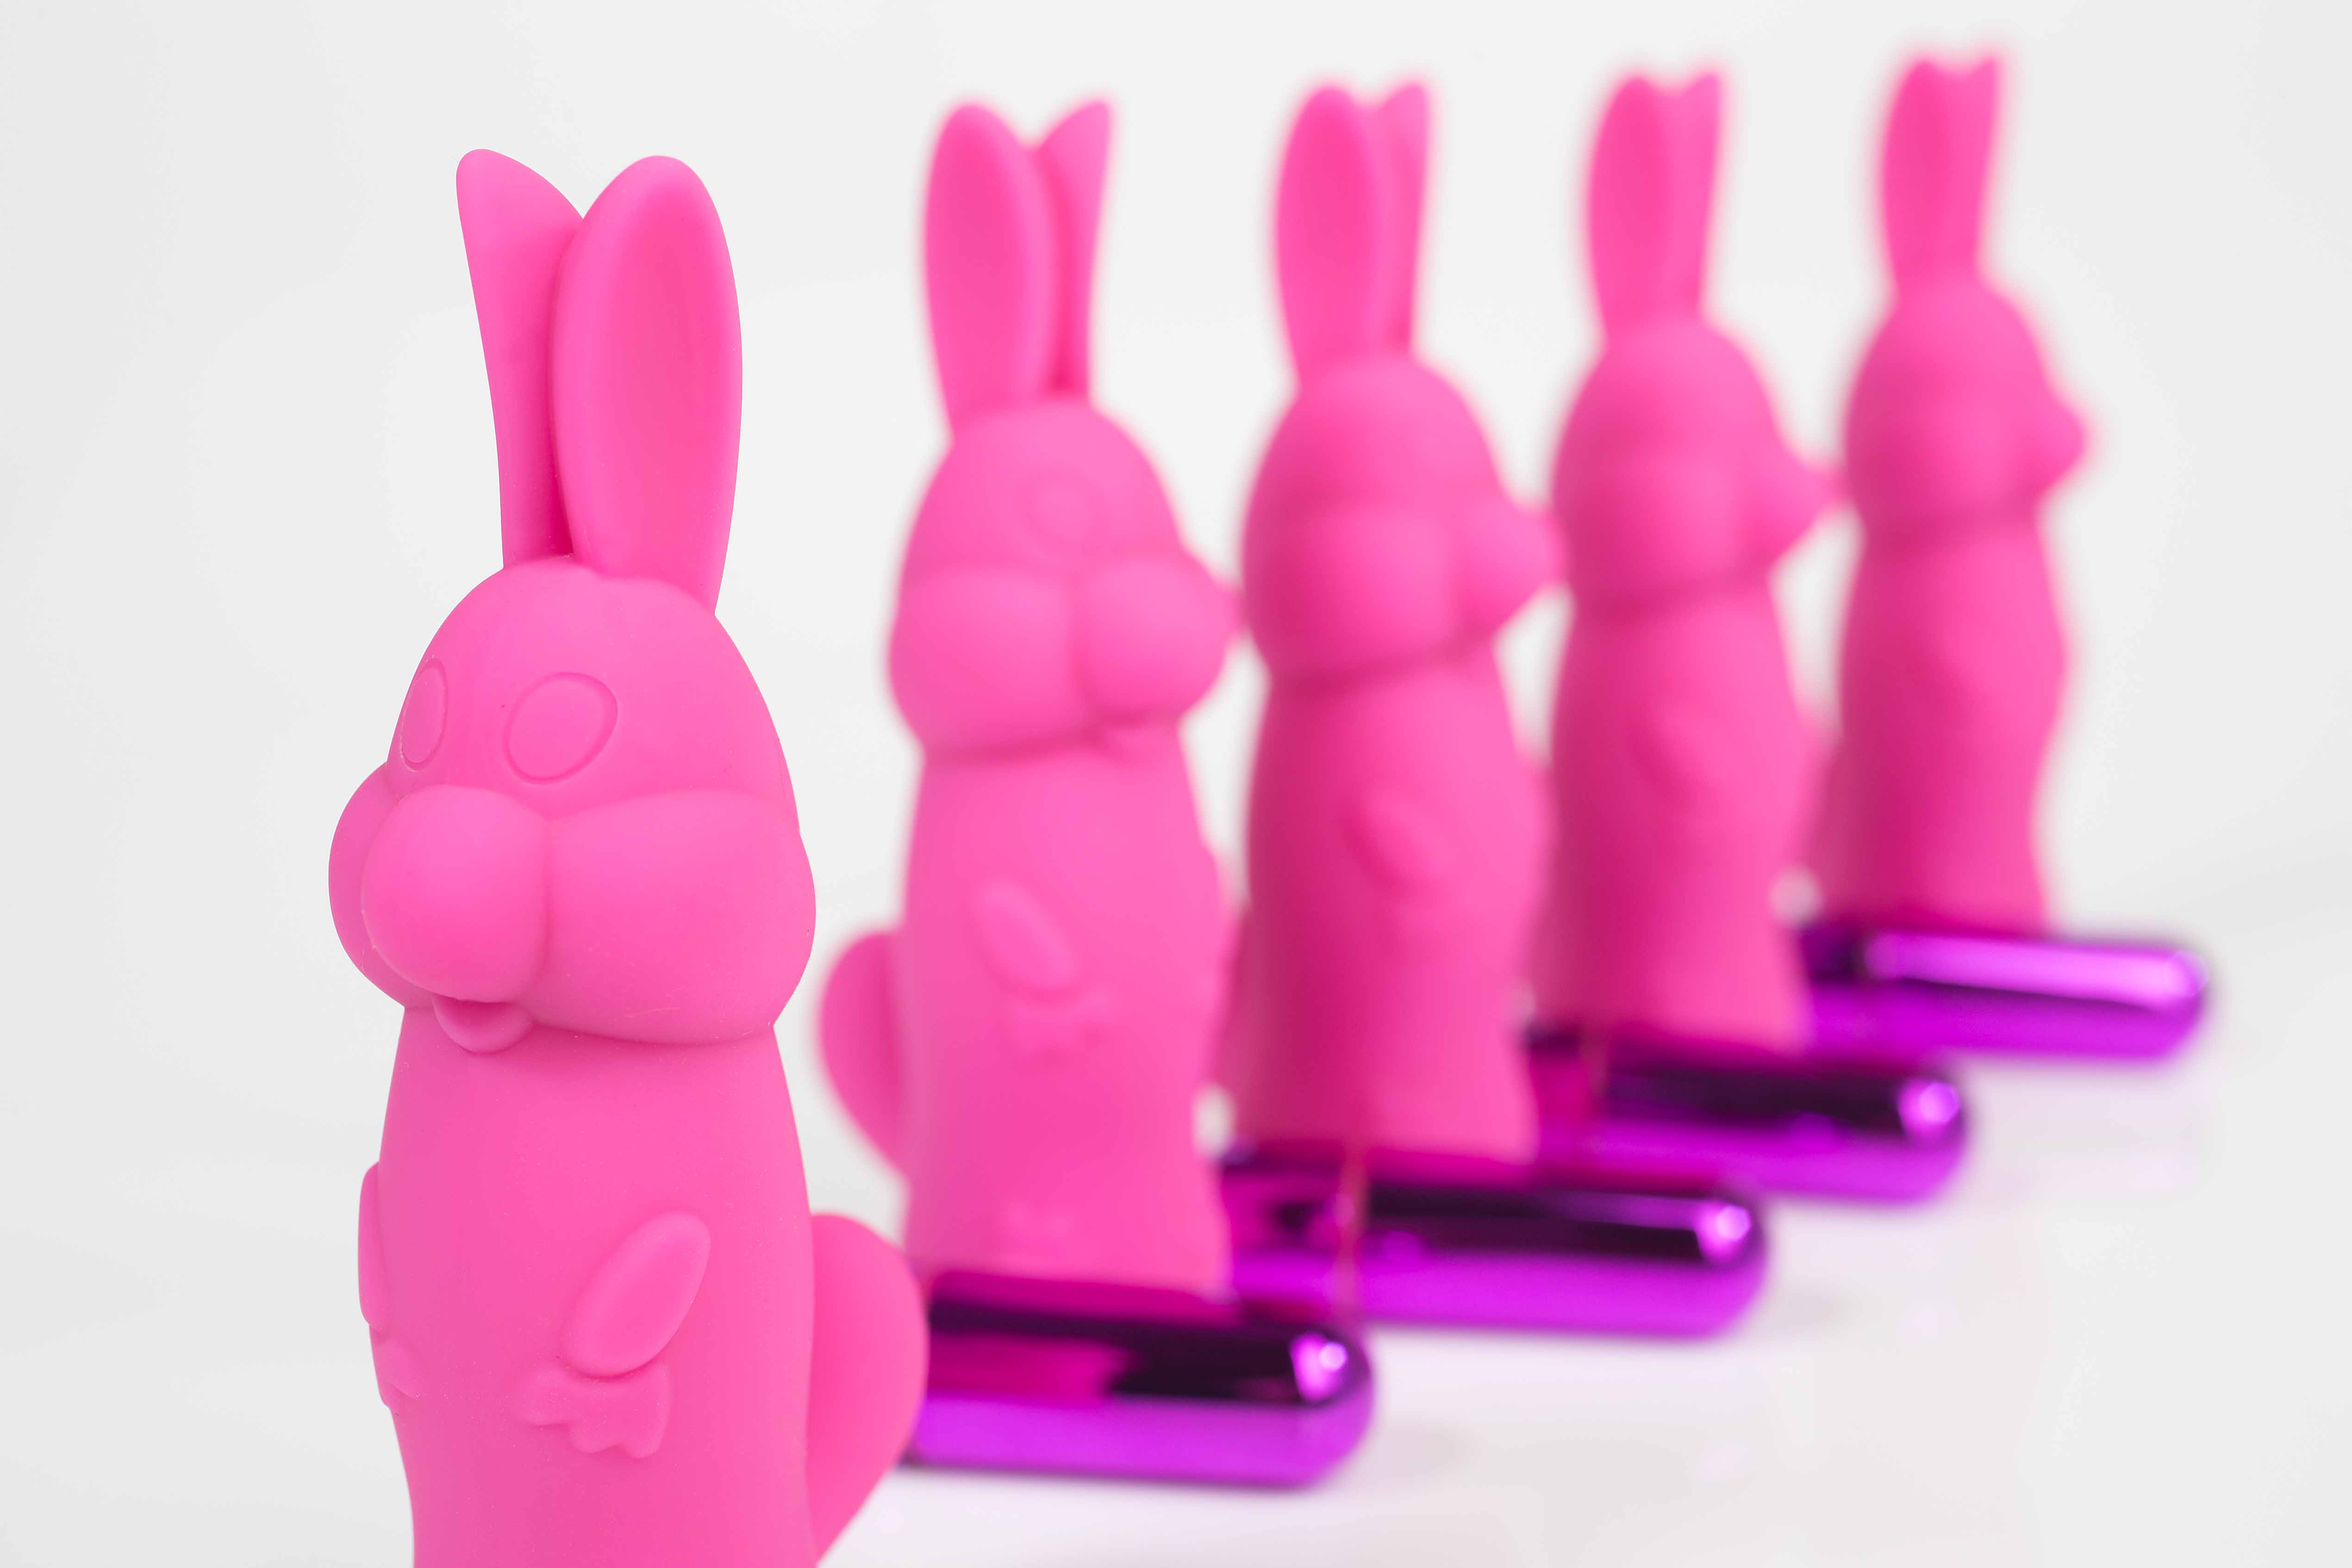 army of rabbit vibrators